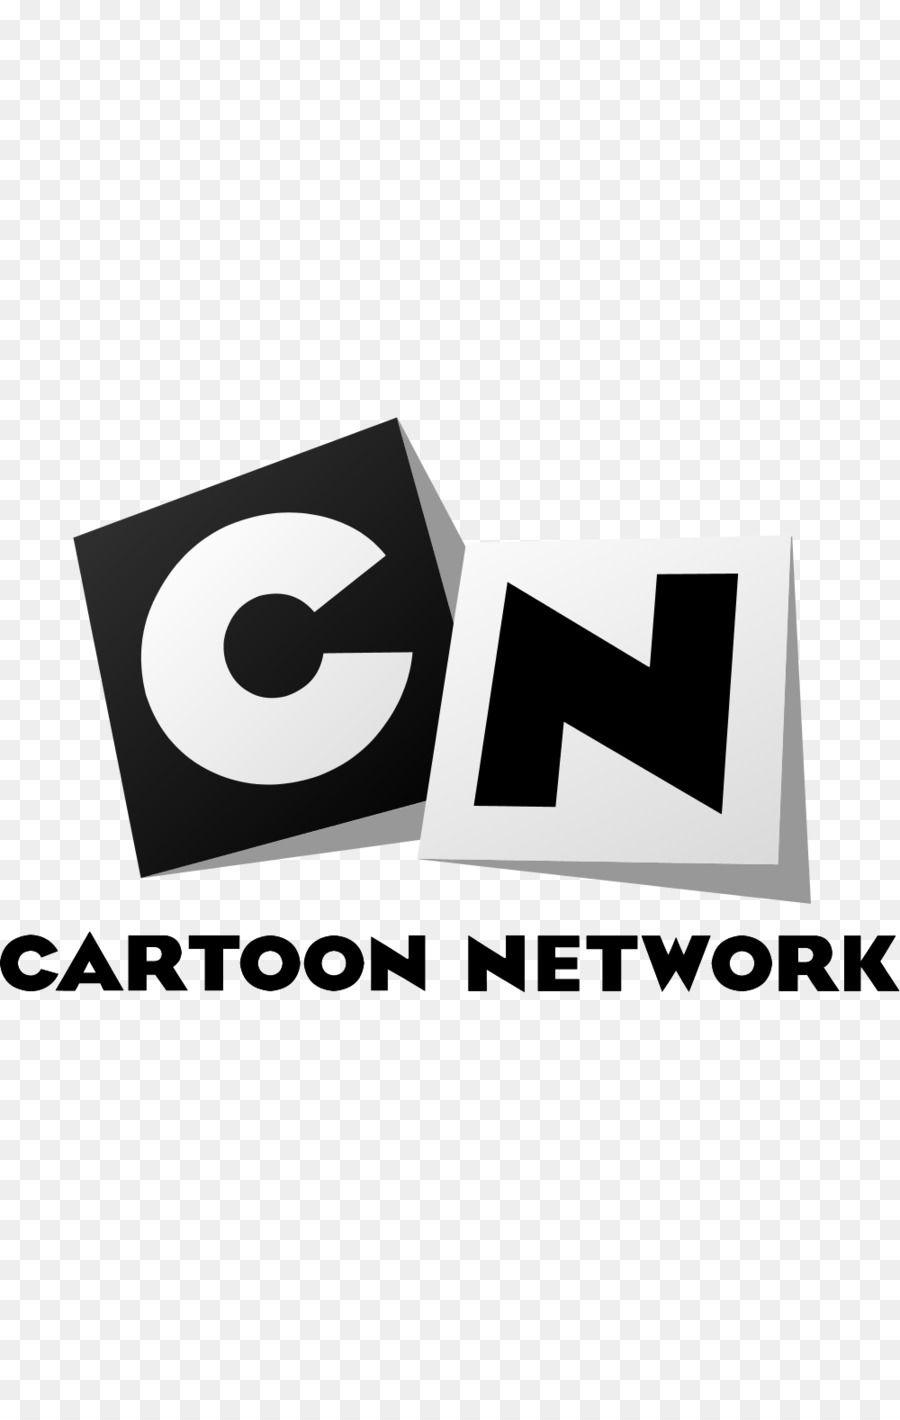 Cartoon Network Studios Logo - Cartoon Network Studios Television show network png